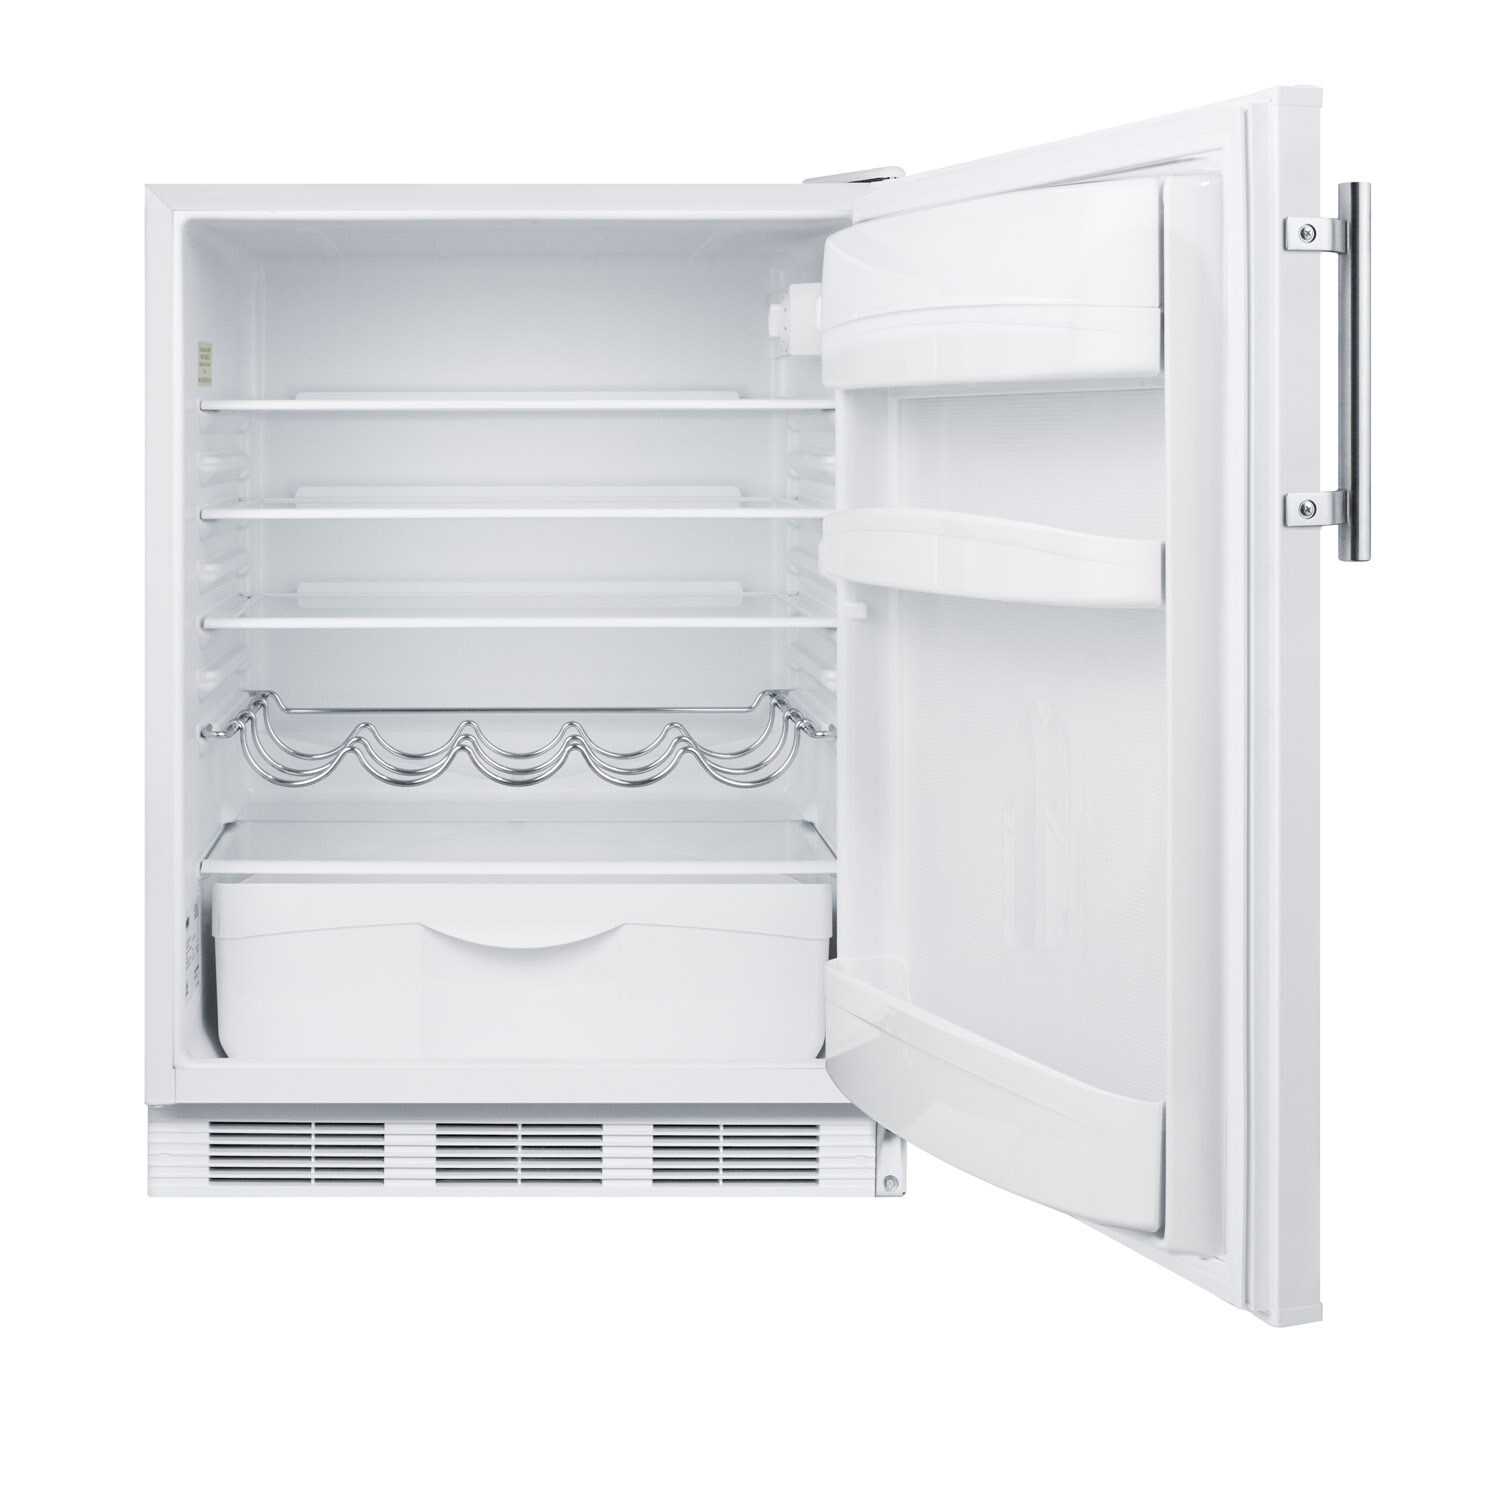 Summit Appliance 19 in. 1.7 cu. ft. Mini Fridge without Freezer in